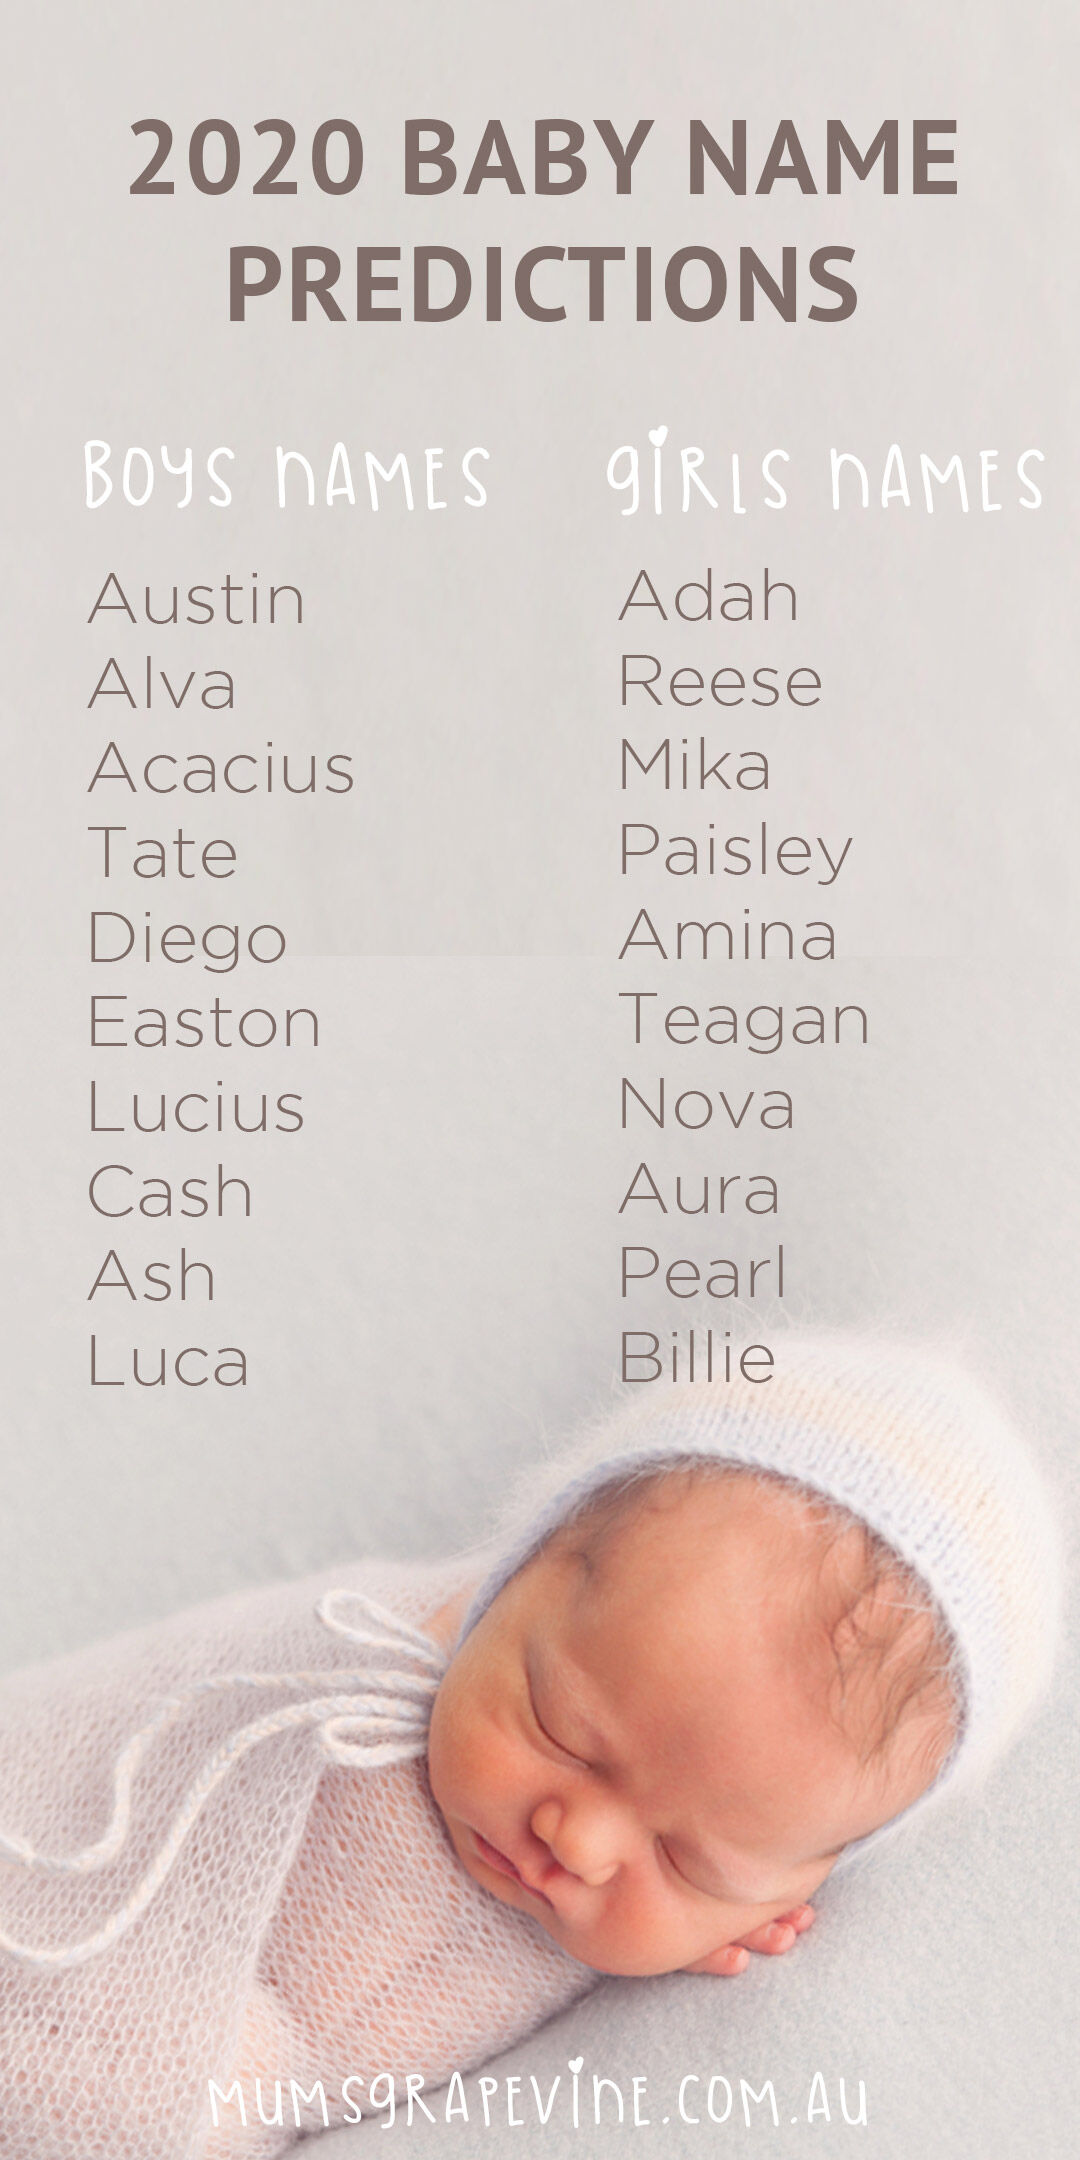 2020 baby name predictions